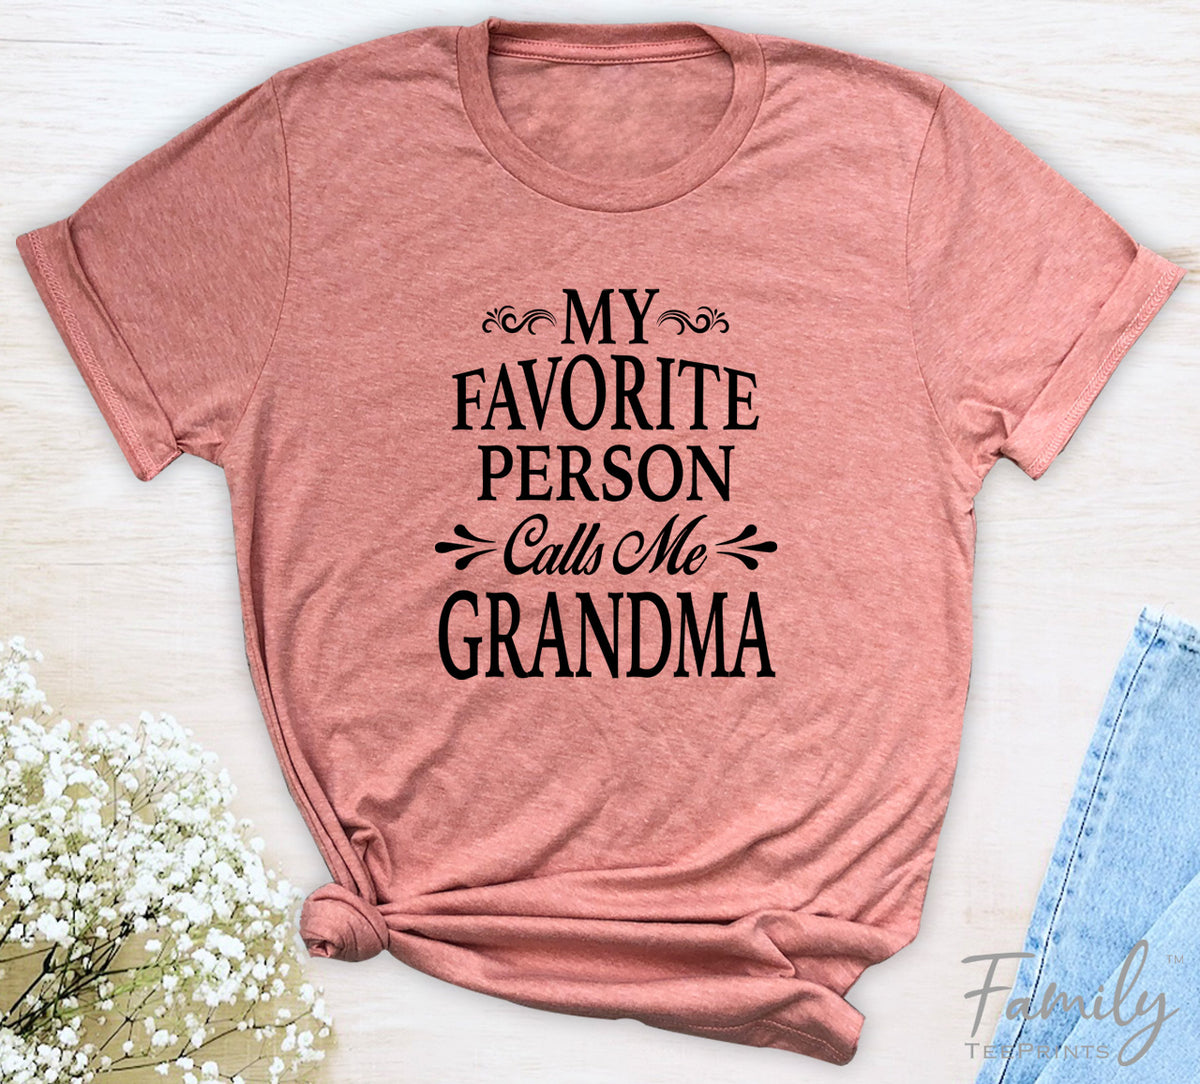 My Favorite Person Calls Me Granny - Unisex T-shirt - Granny Shirt - Gift For Granny